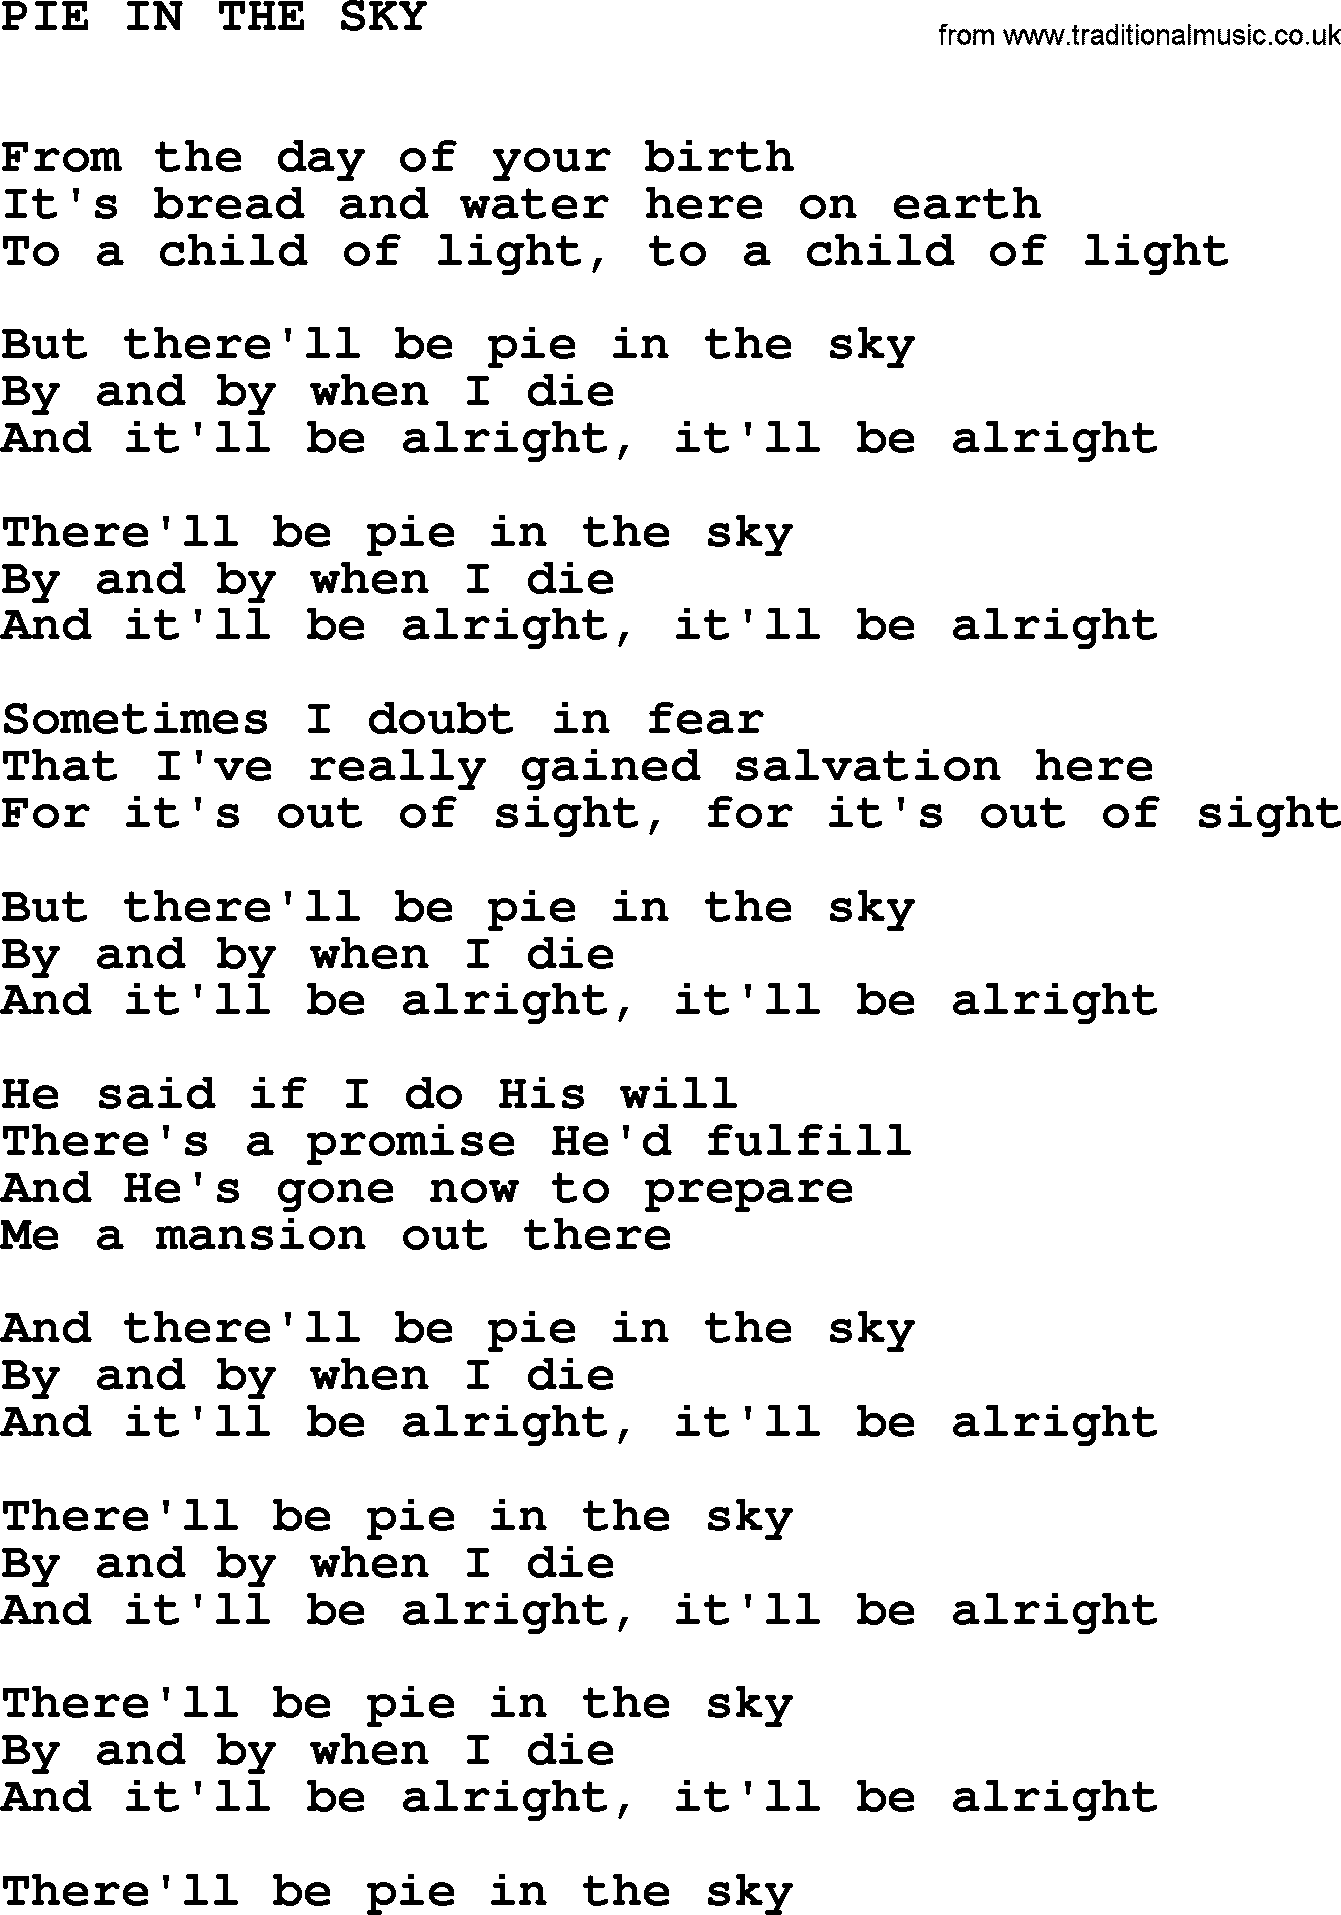 Johnny Cash song Pie In The Sky.txt lyrics